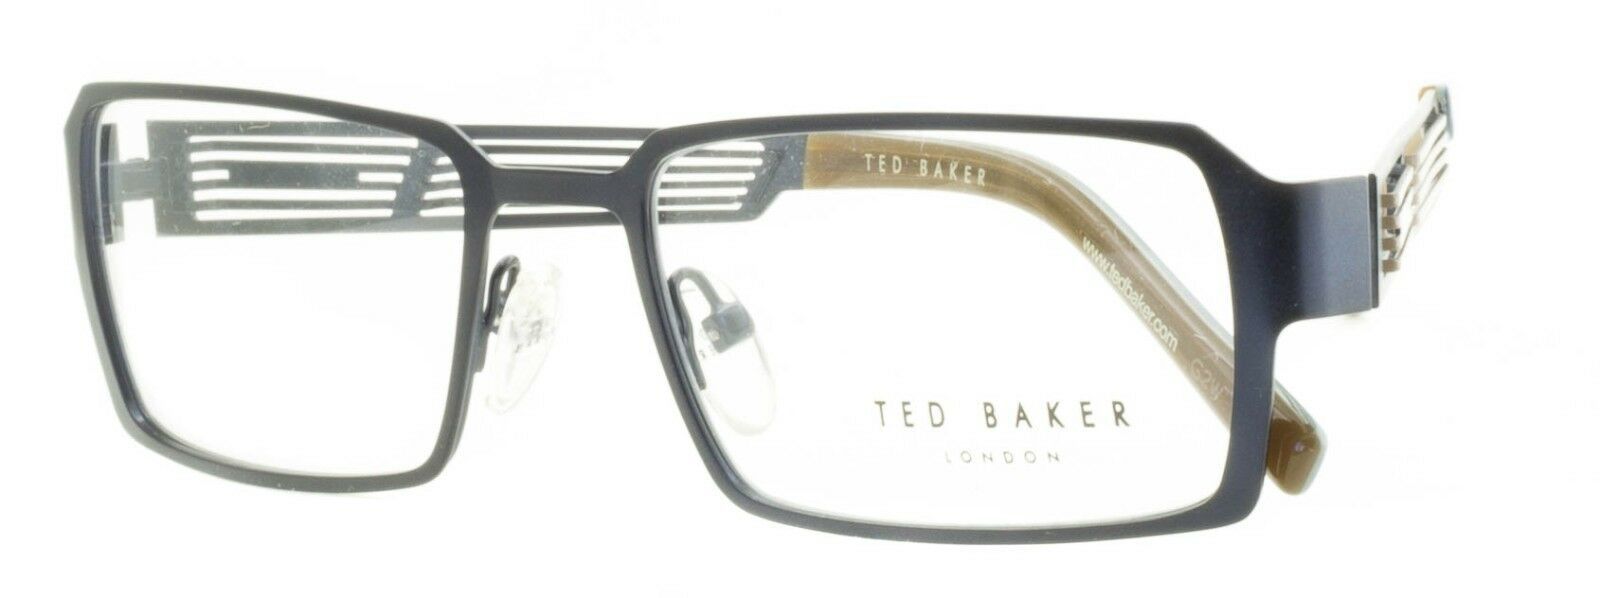 TED BAKER Straight A's 4178 618 Eyewear FRAMES Glasses Eyeglasses RX Optical-New